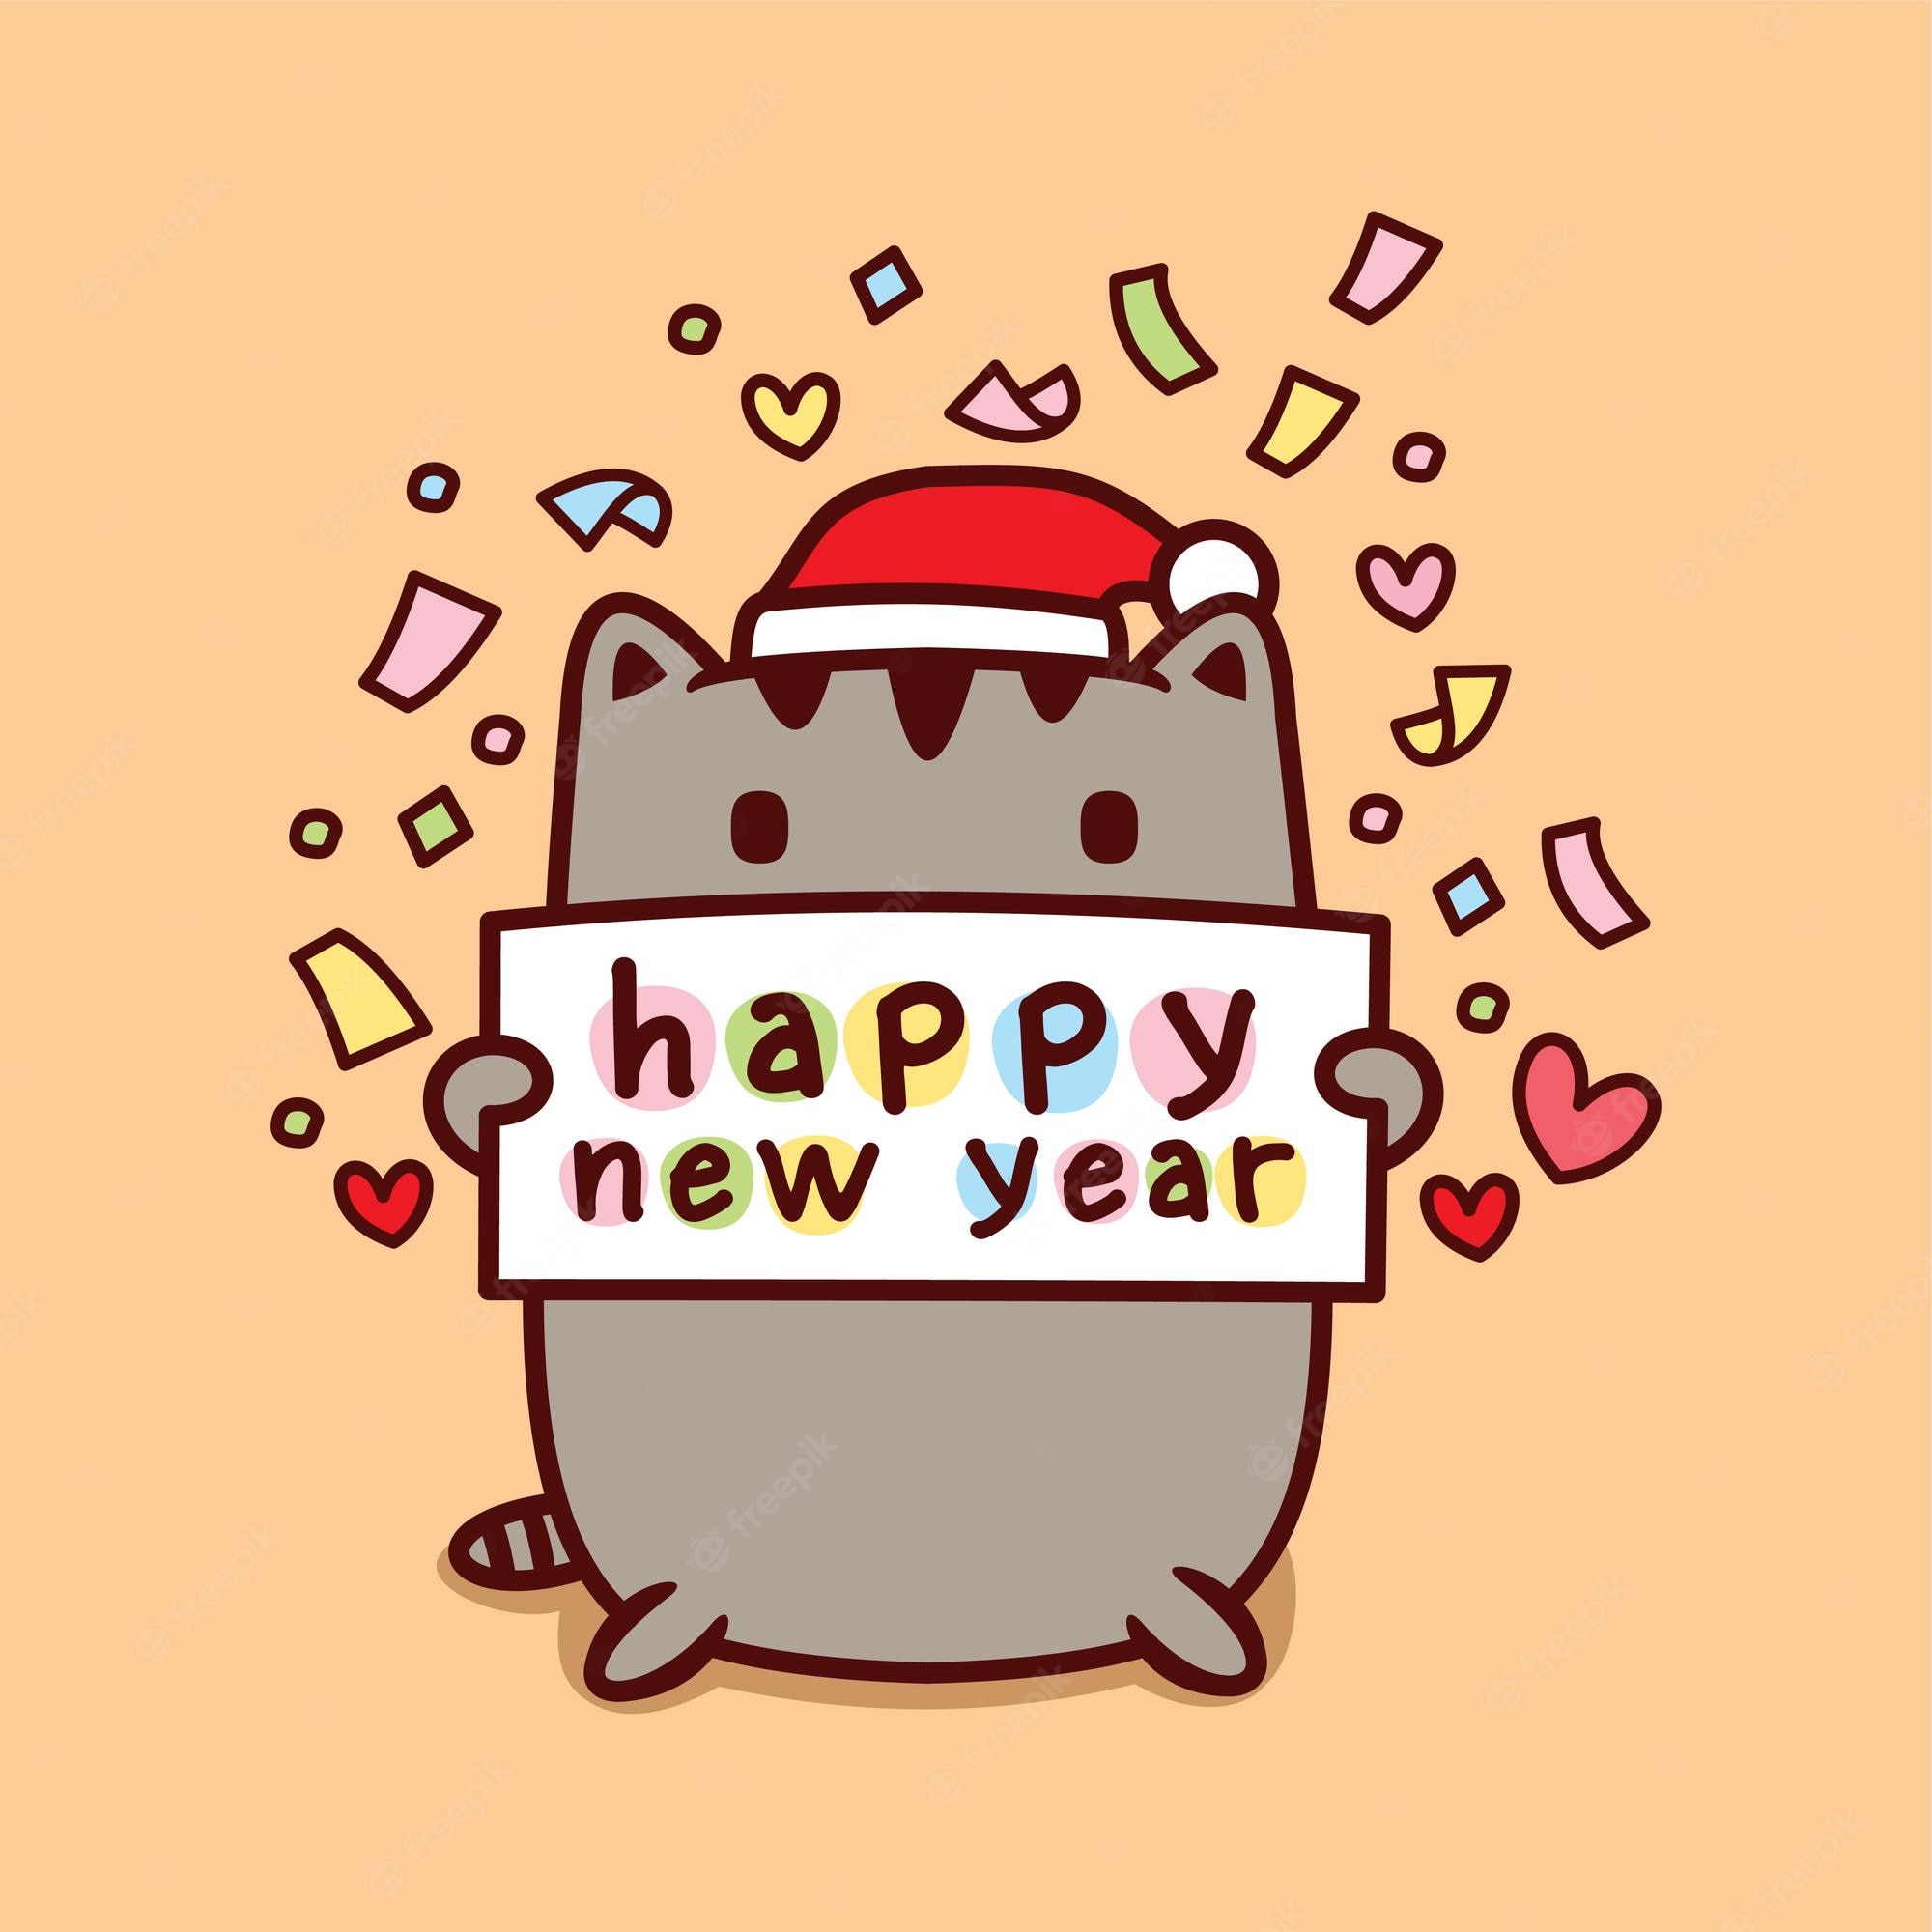 Happy New Year Cat Image